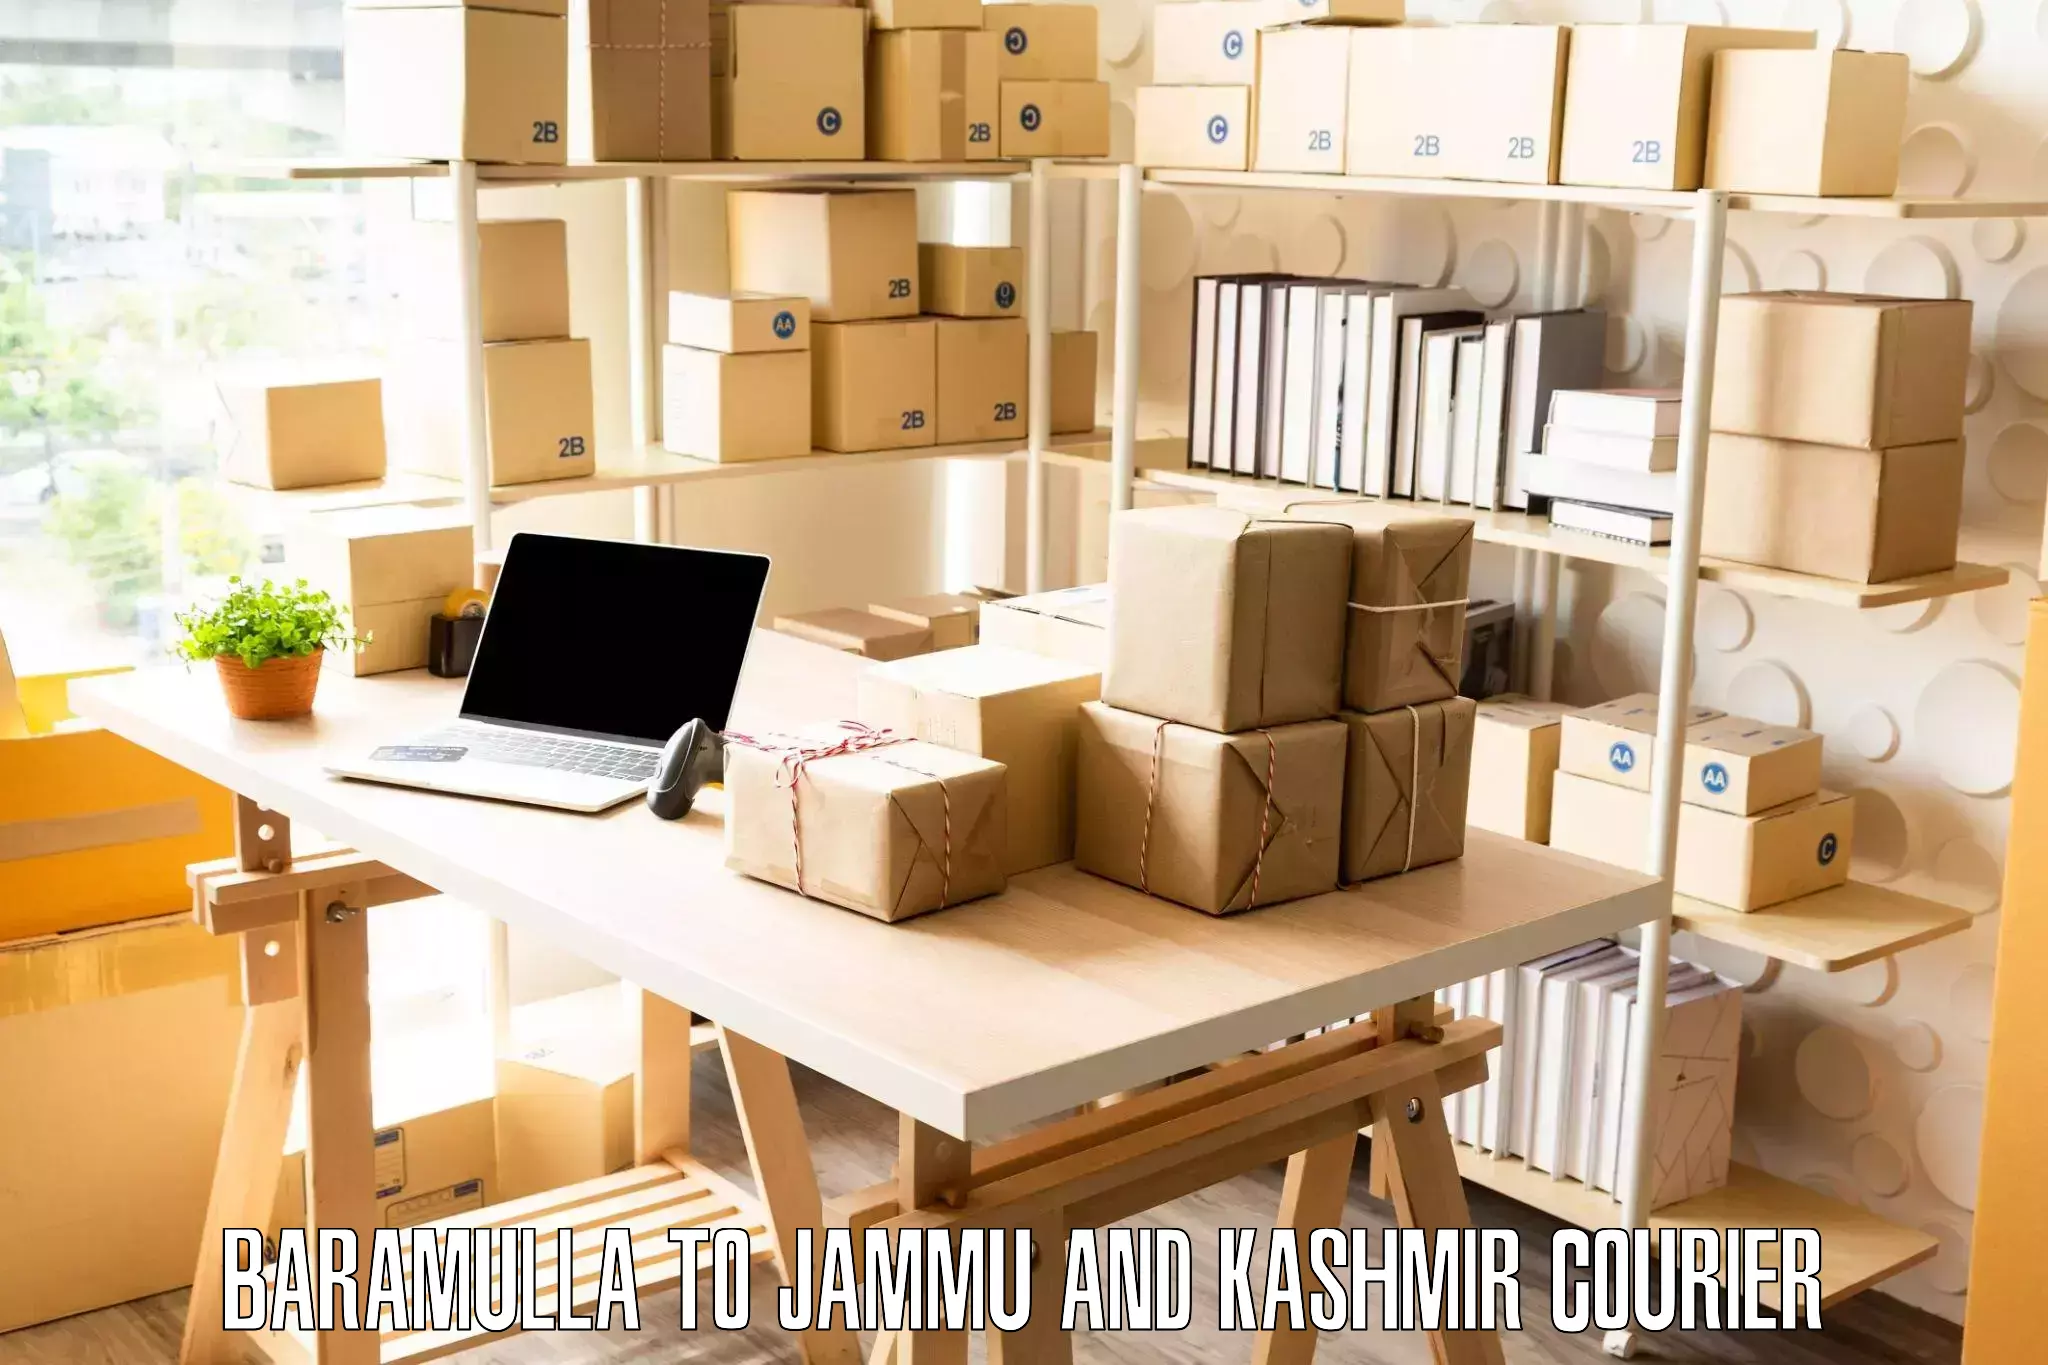 Furniture delivery service Baramulla to Srinagar Kashmir